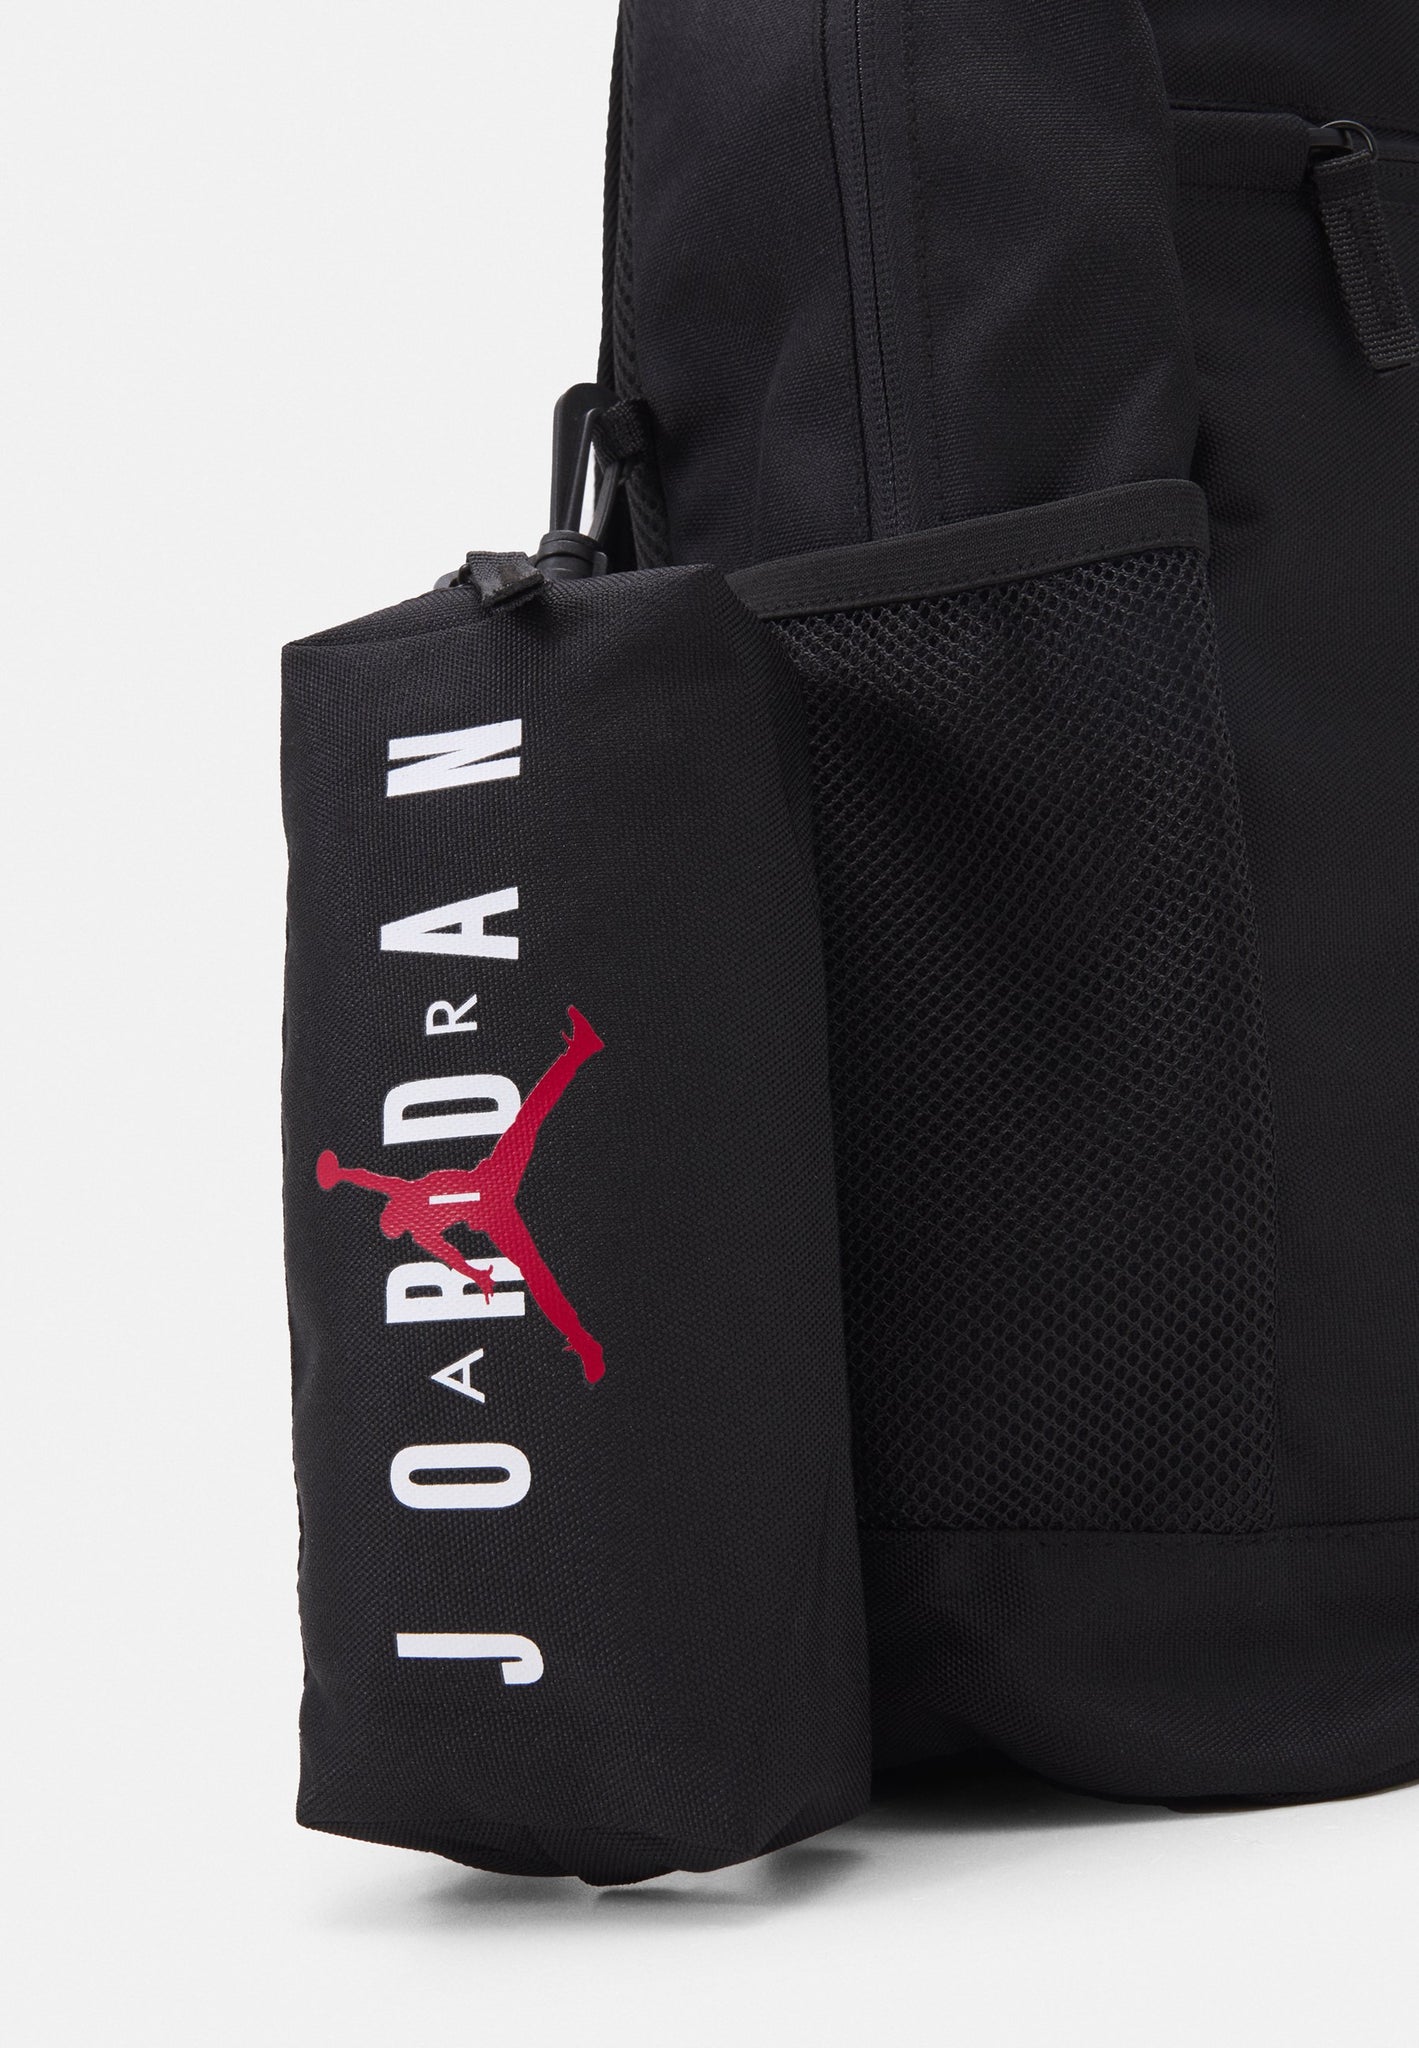 Jordan backpack sac à dos avec trousse "Black"